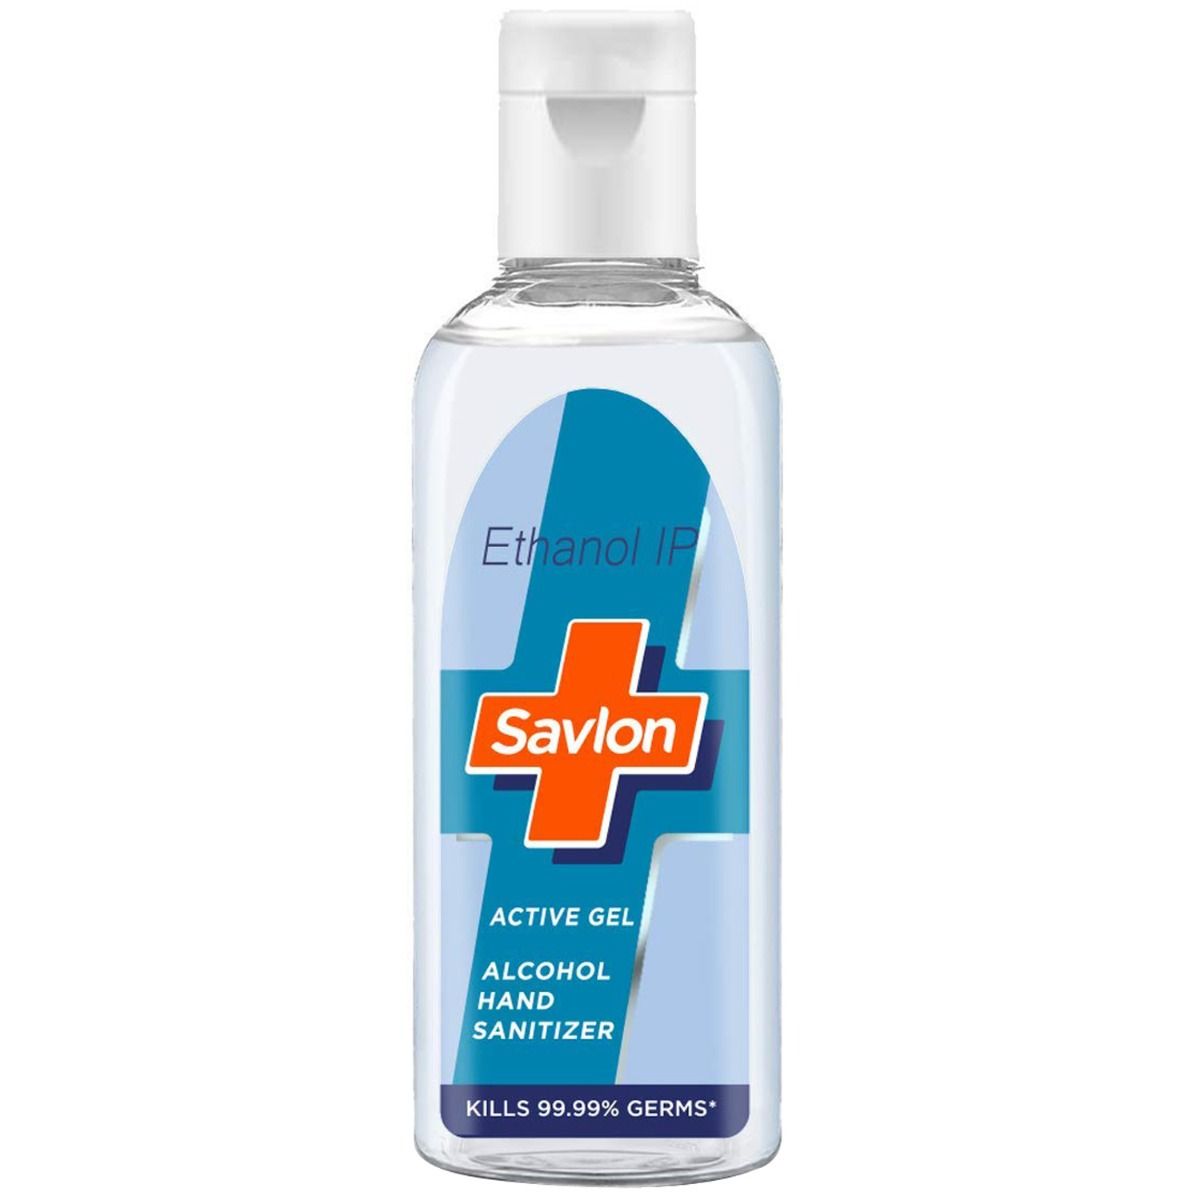 Buy Savlon Active Gel Alcohol Hand Sanitizer, 100 ml Online